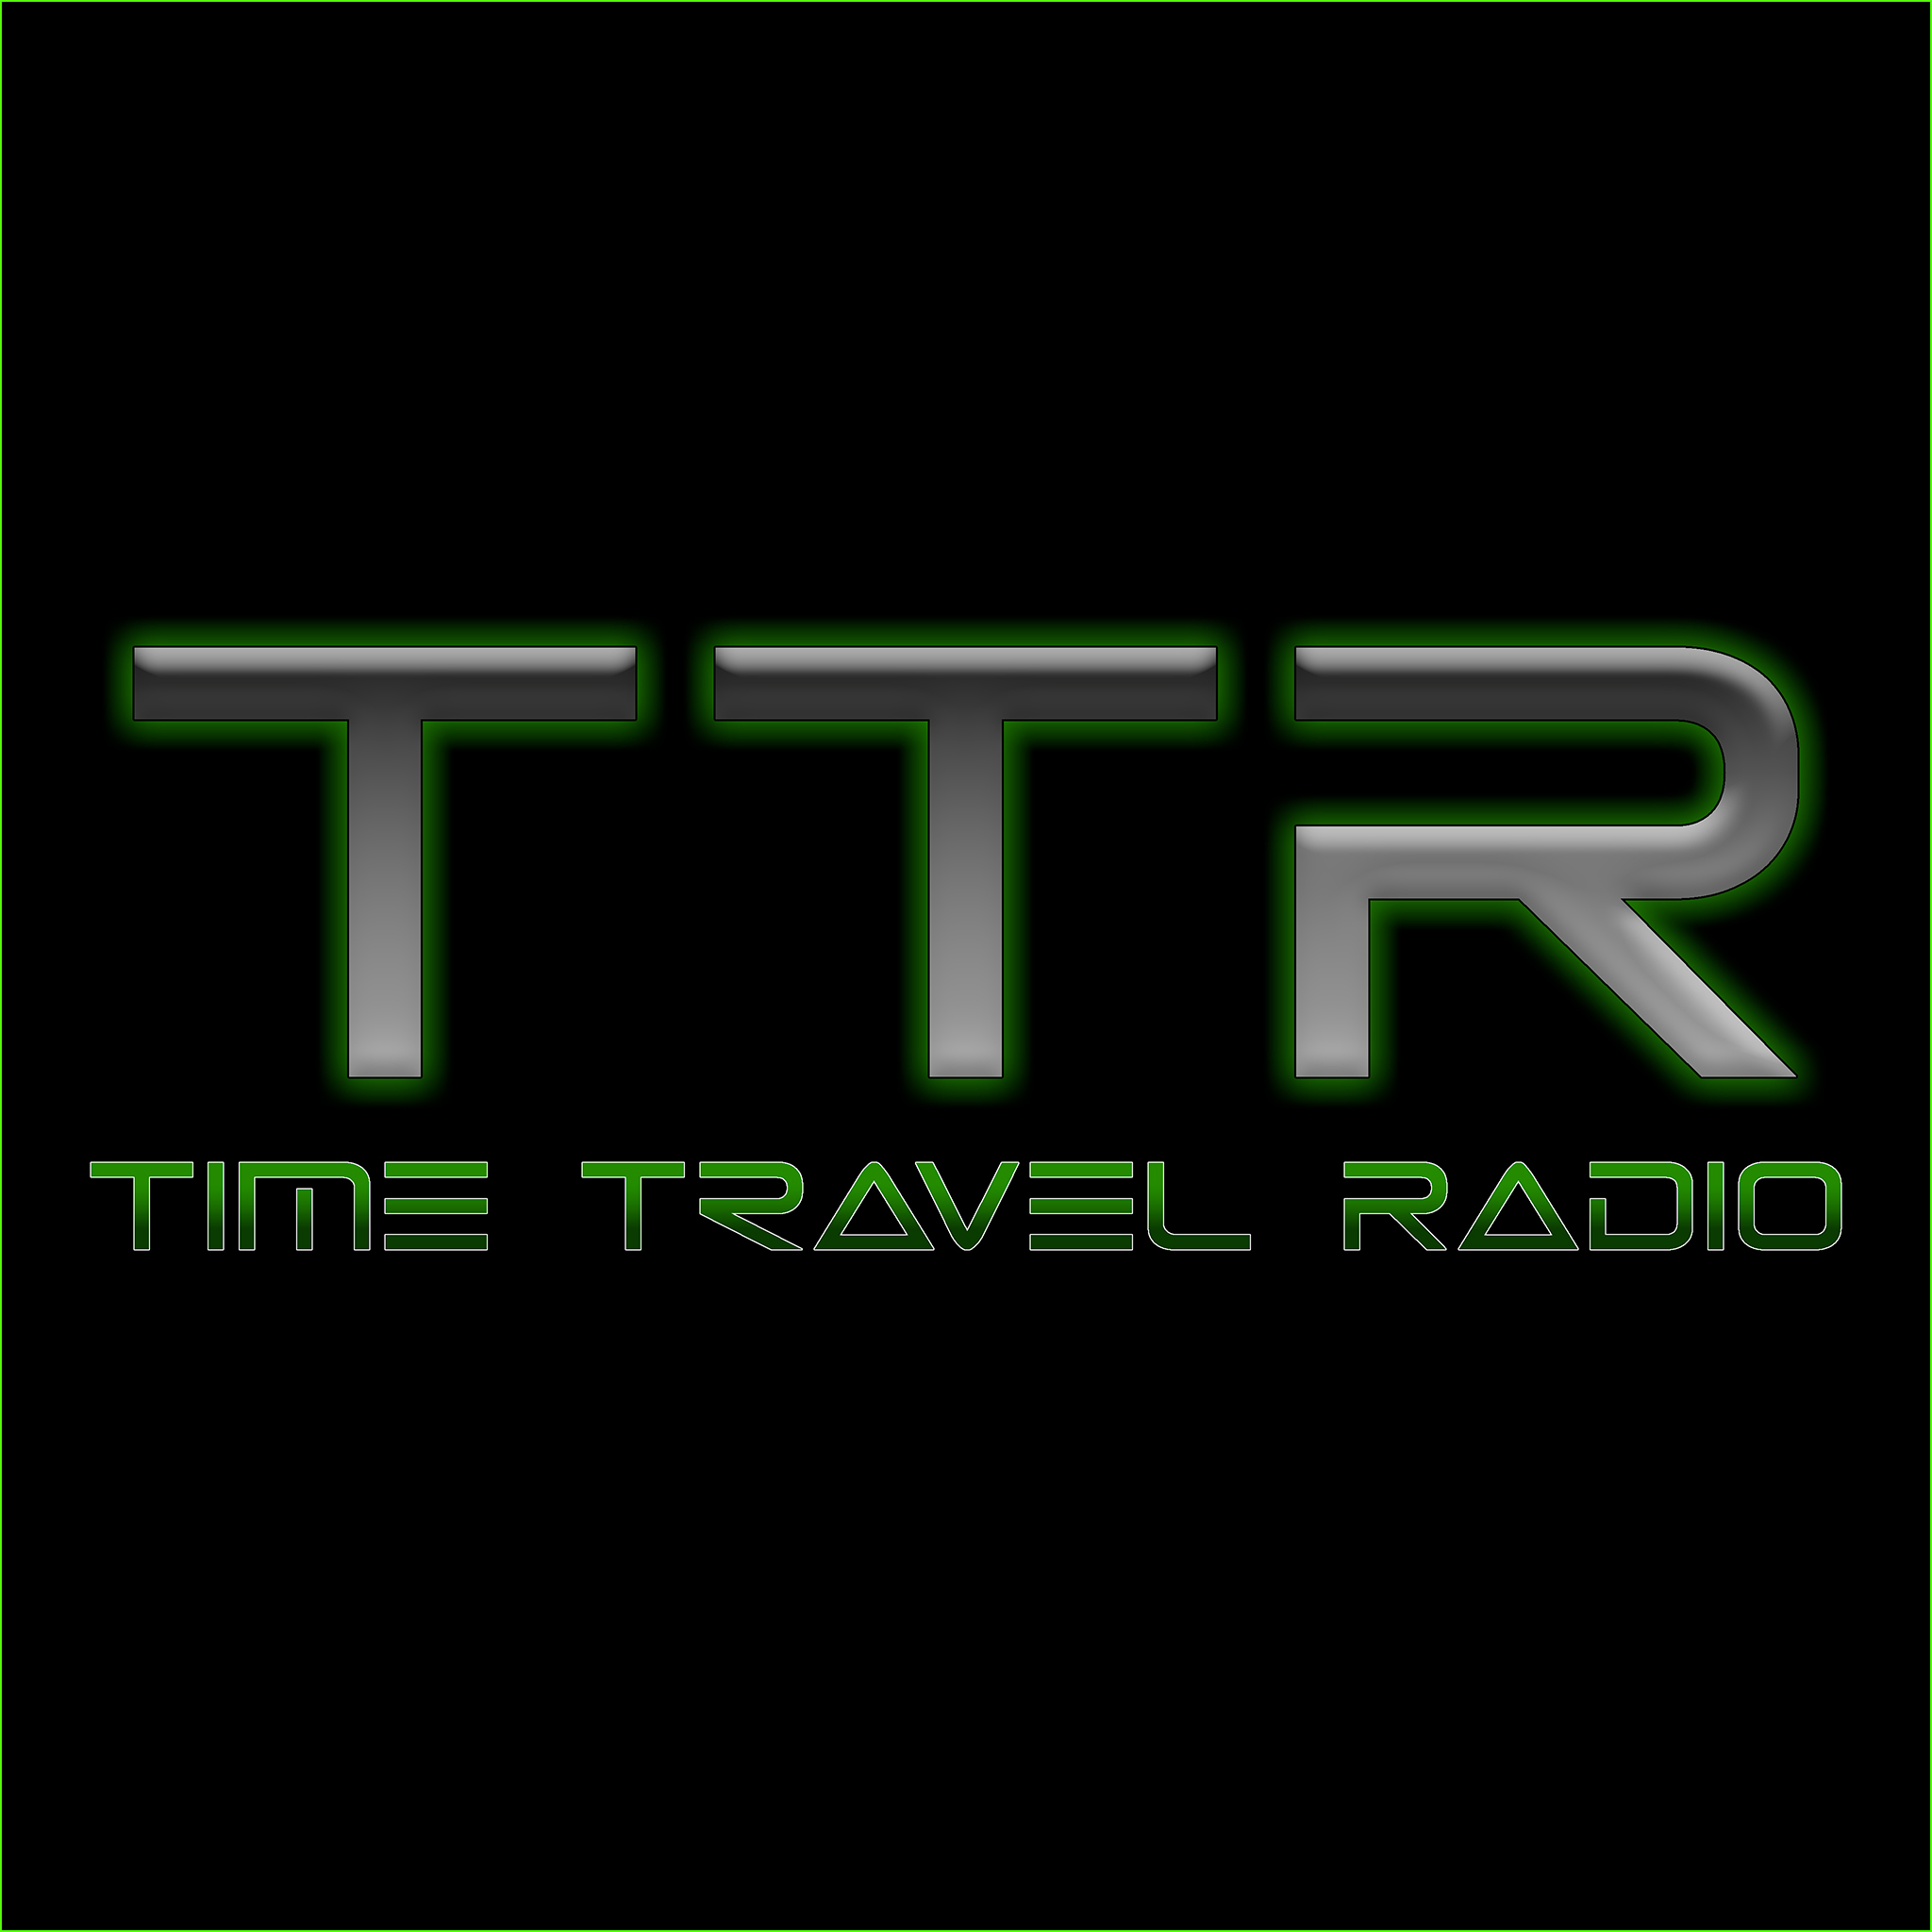 Time Travel Radio (TTR)